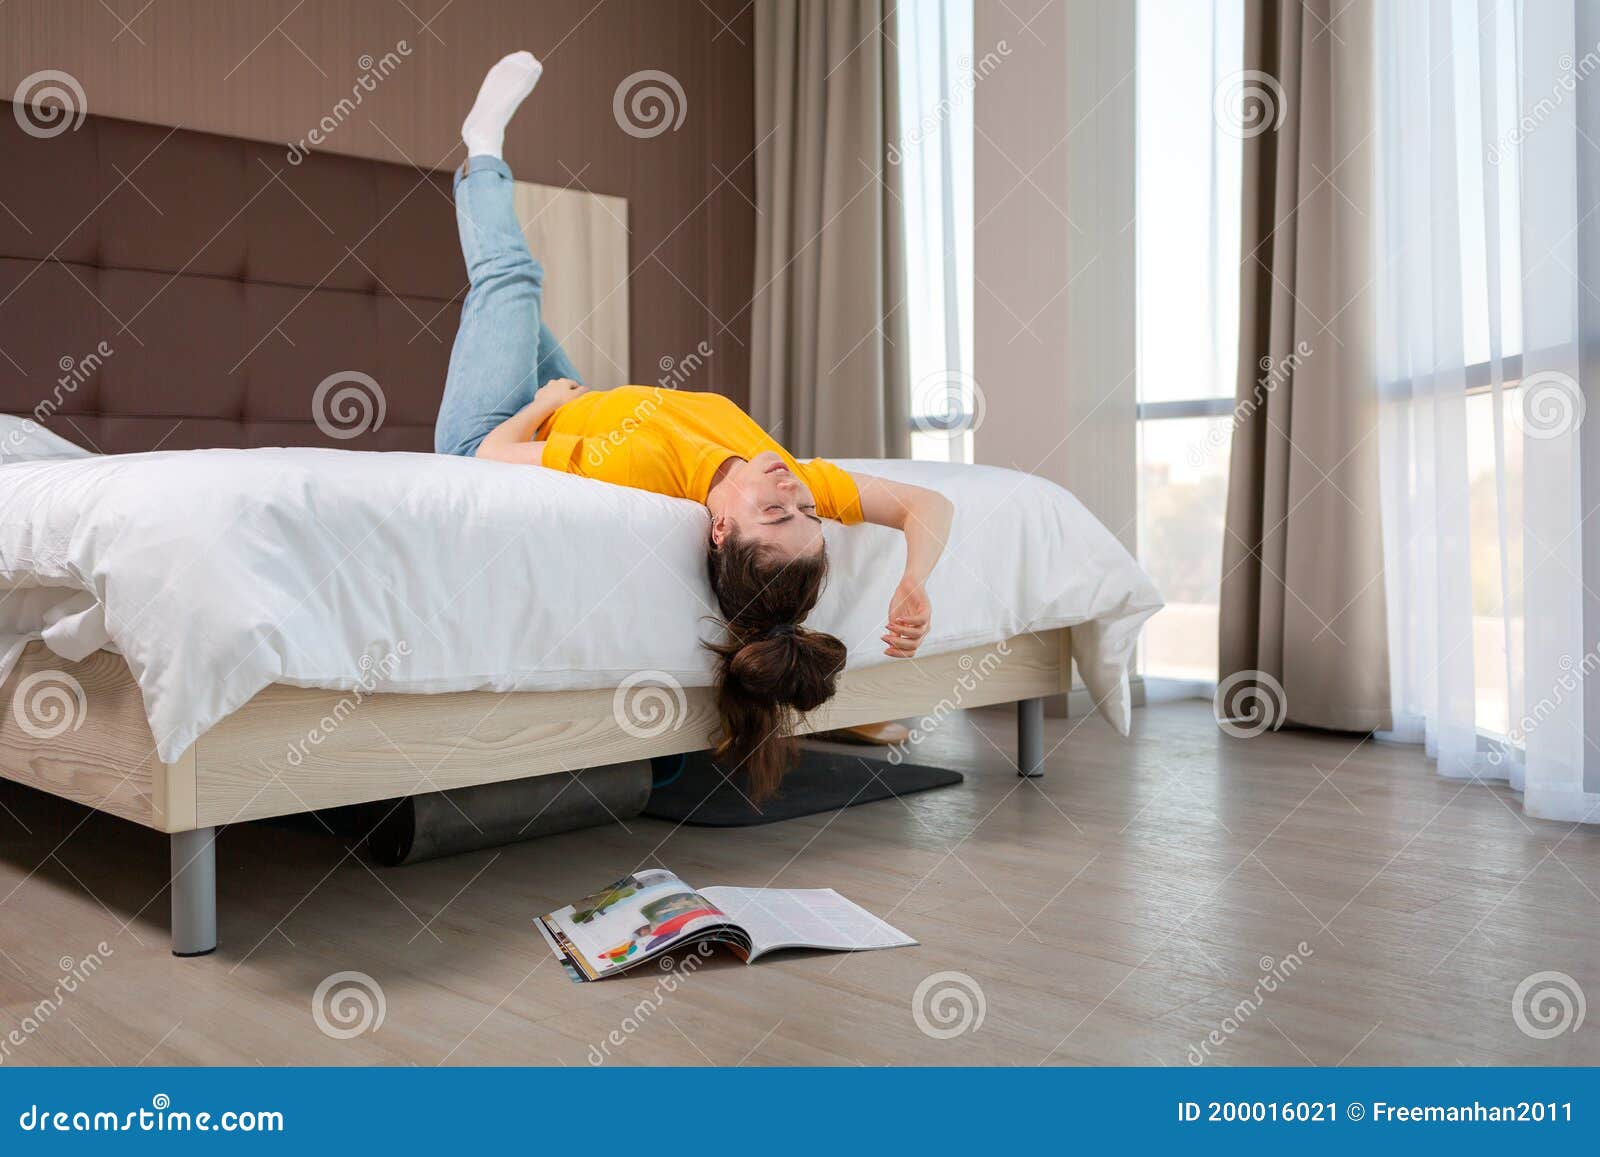 boredom-quarantine-woman-lying-bed-her-head-hands-hanging-over-edge-there-s-magazine-floor-boredom-200016021.jpg